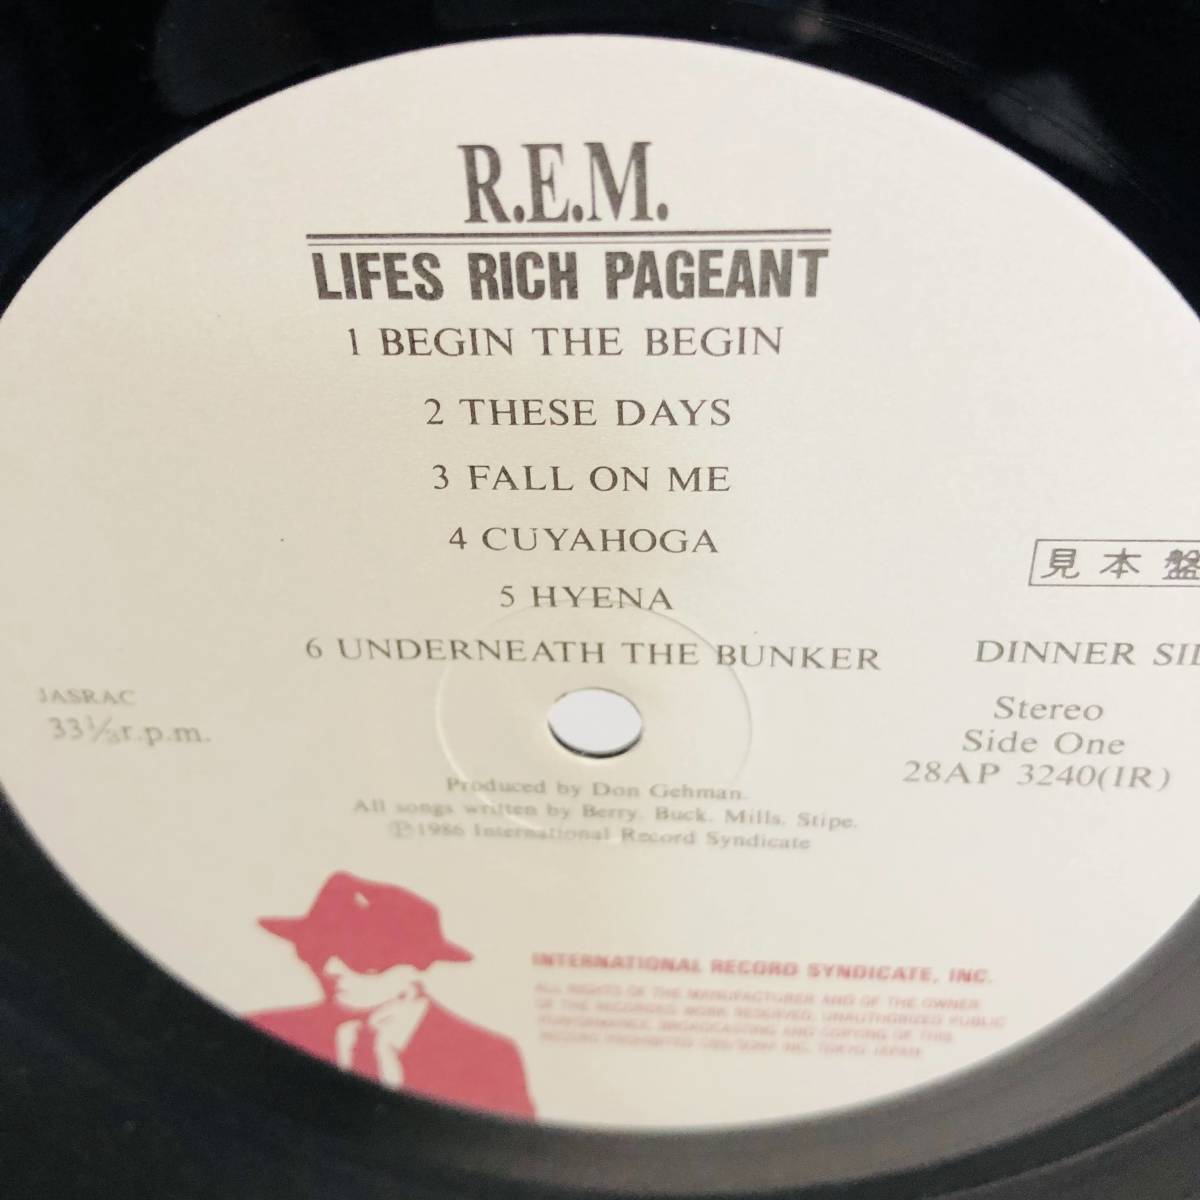 【LP】レコード 再生未確認 見本盤 R.E.M.【LIFES RICH PAGEANT】28AP 3240 ※まとめ買い大歓迎!同梱可能です_画像5